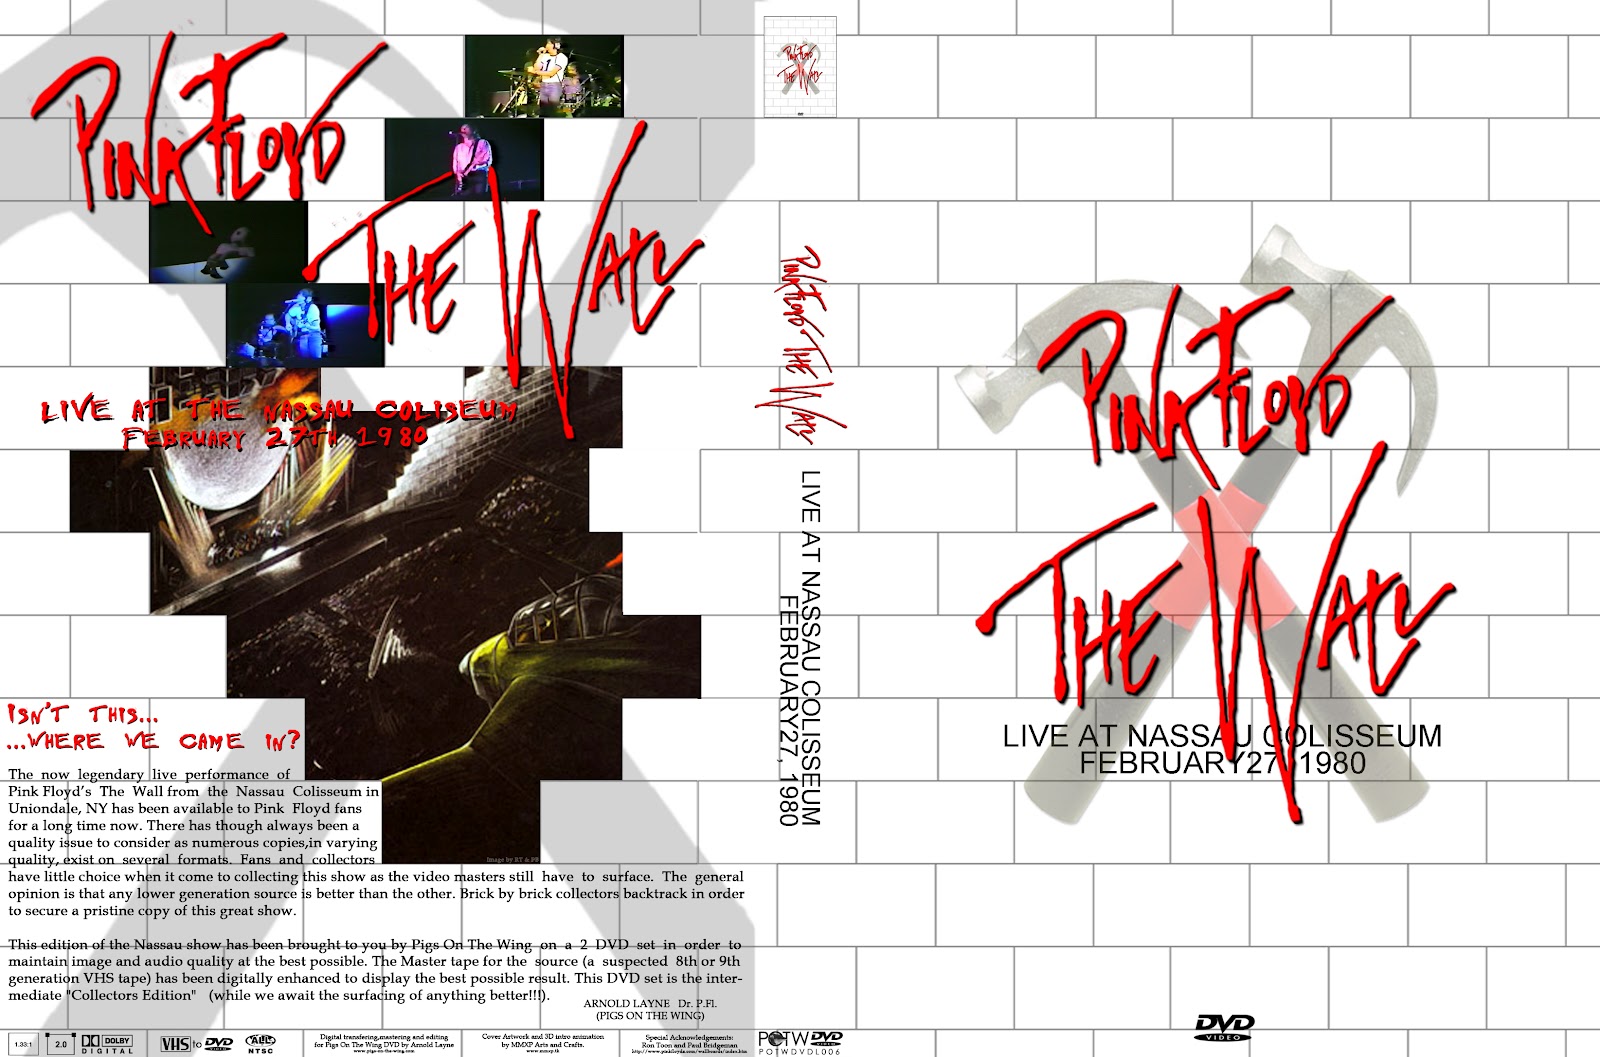 Стен перевод песни. Альбом стена Пинк Флойд. Обложка CD Pink Floyd the Wall. Пинк Флойд стена обложка альбома. Pink Floyd DVD.